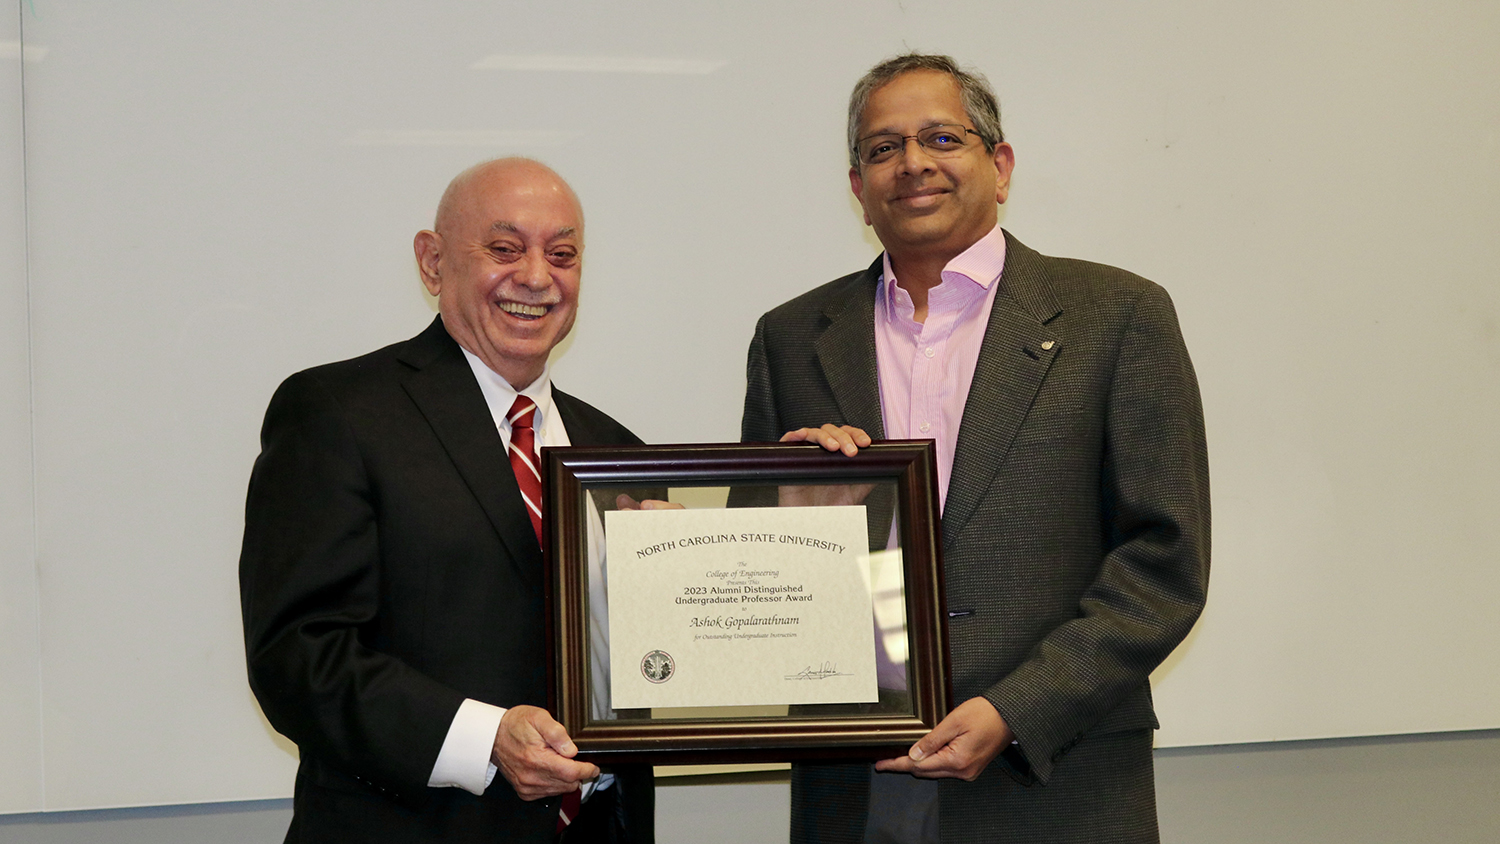 Dean Louis Martin-Vega, left, presents Ashok Gopalarathnam with the Alumni Distinguished Undergraduate Professor Award.